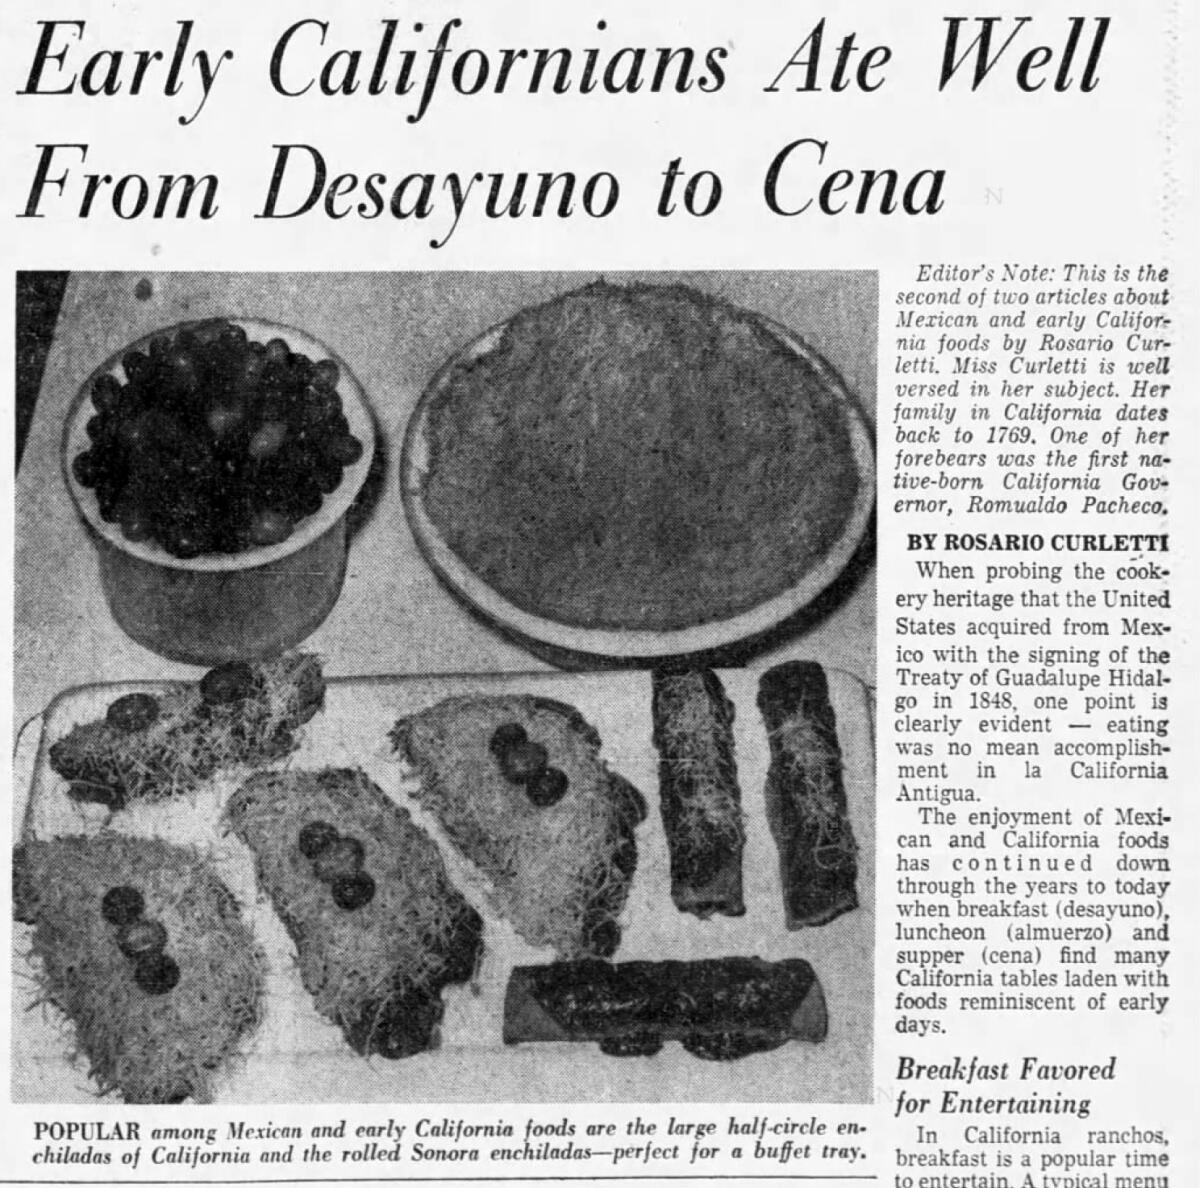 Los Angeles Times, November 13, 1958